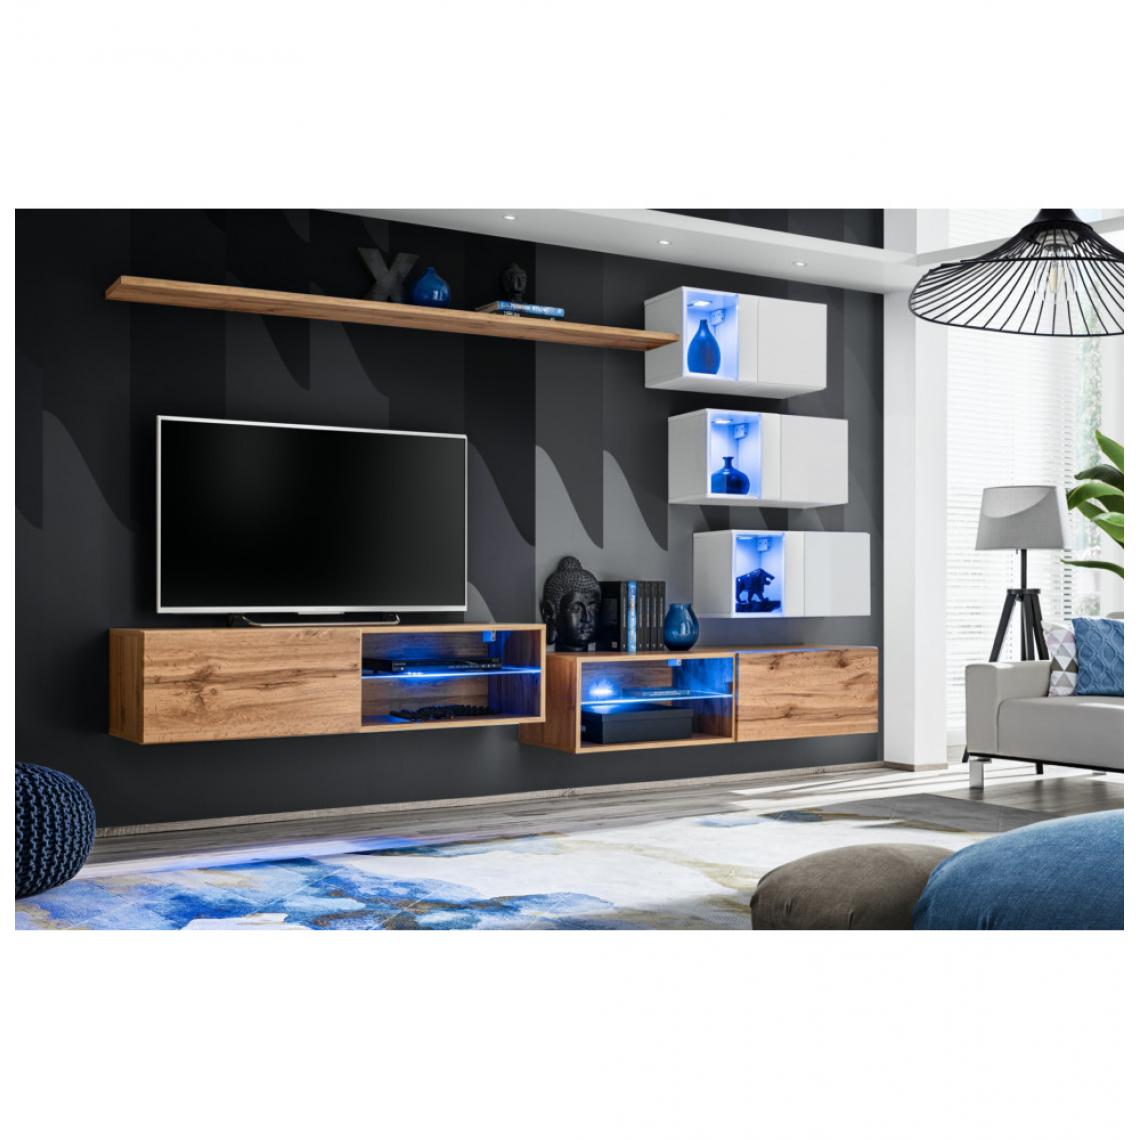 Ac-Deco - Ensemble meuble TV mural Switch XXIV - L 260 x P 40 x H 170 cm - Marron et blanc - Meubles TV, Hi-Fi